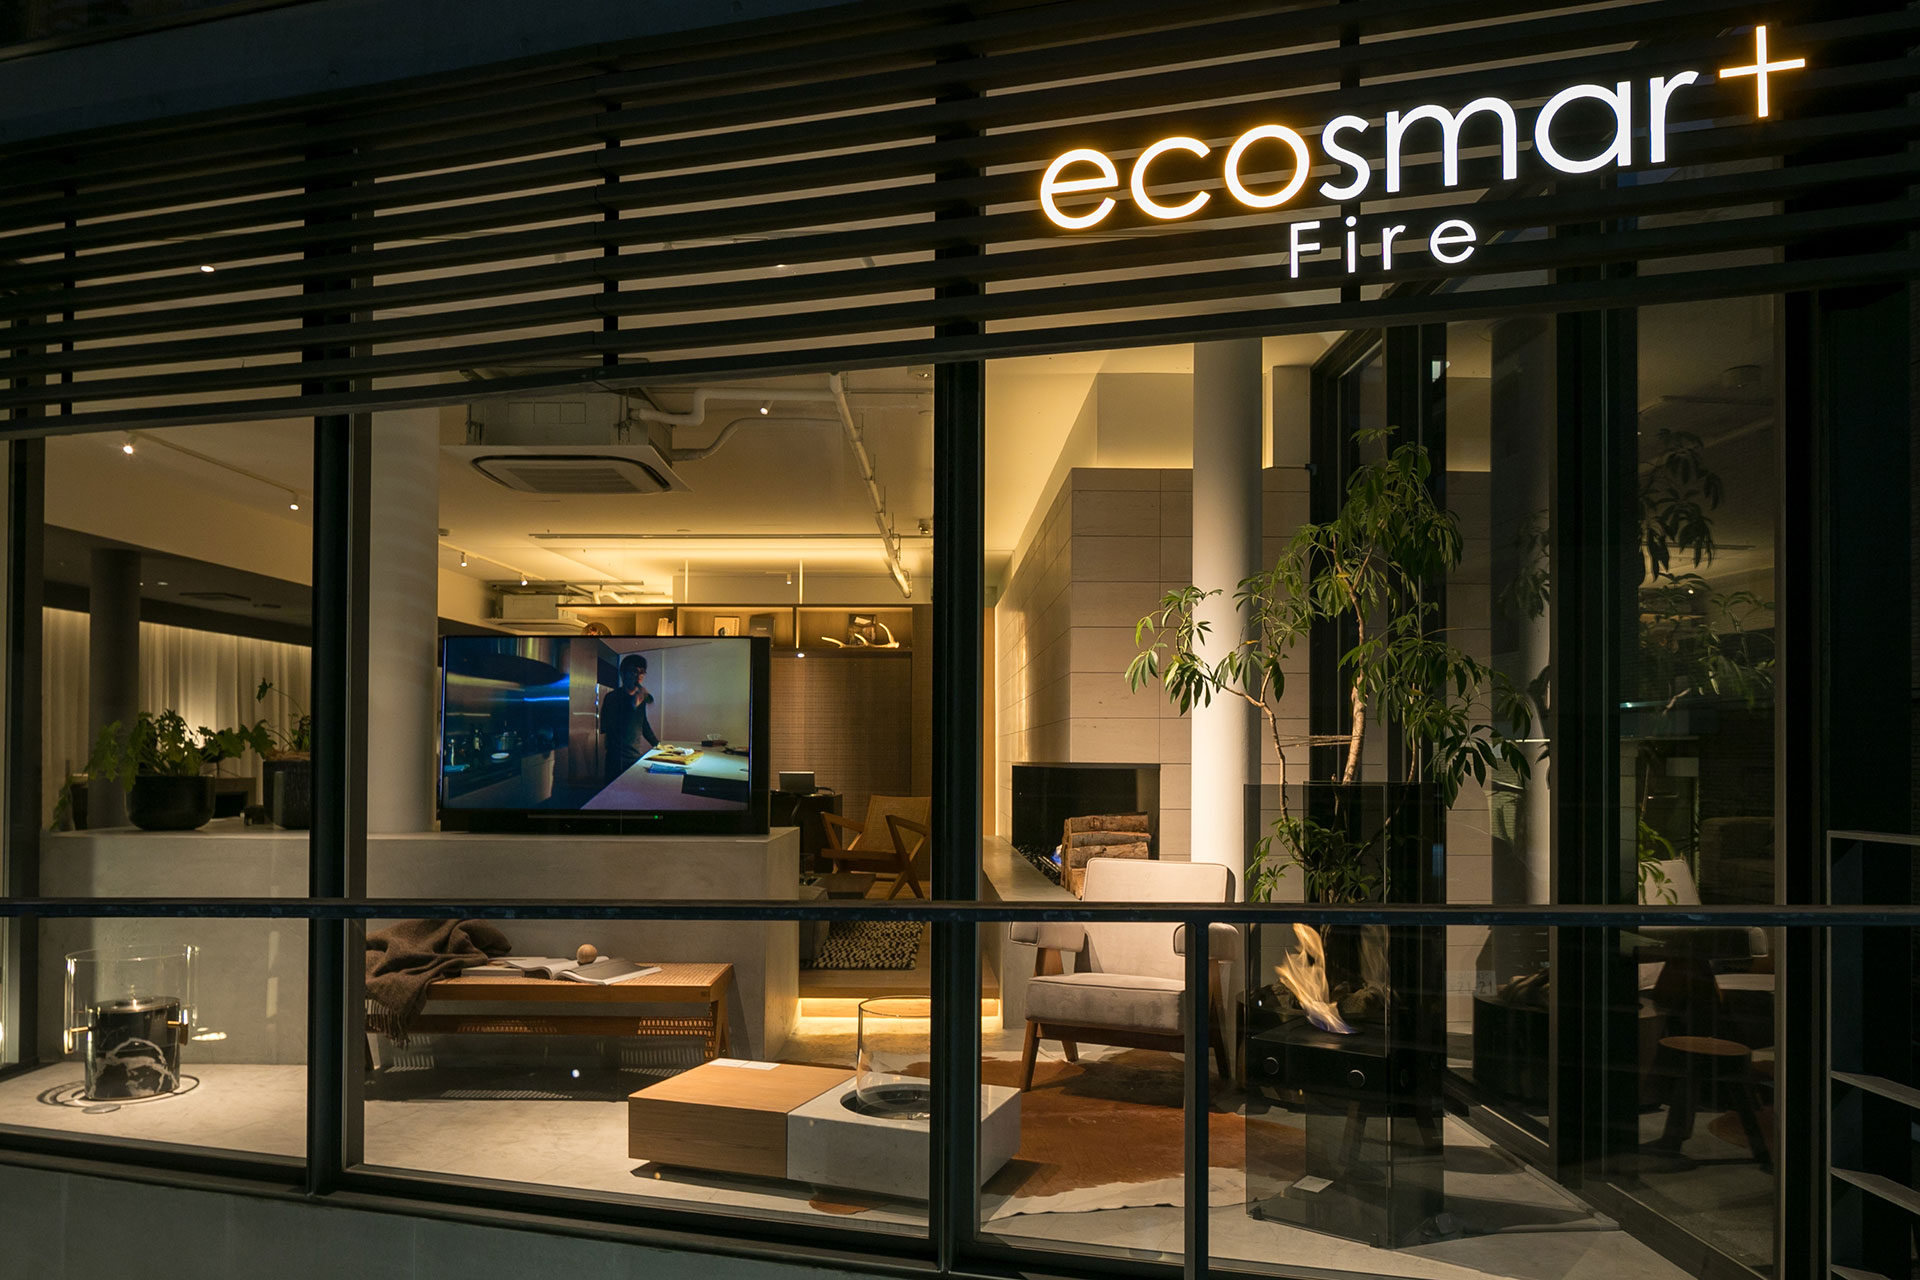 『EcoSmart Fire南青山ショールーム』 ●港区南青山4-24-8。実際に炎を体感できるショールームが、他に東京・六本木と大阪にある。